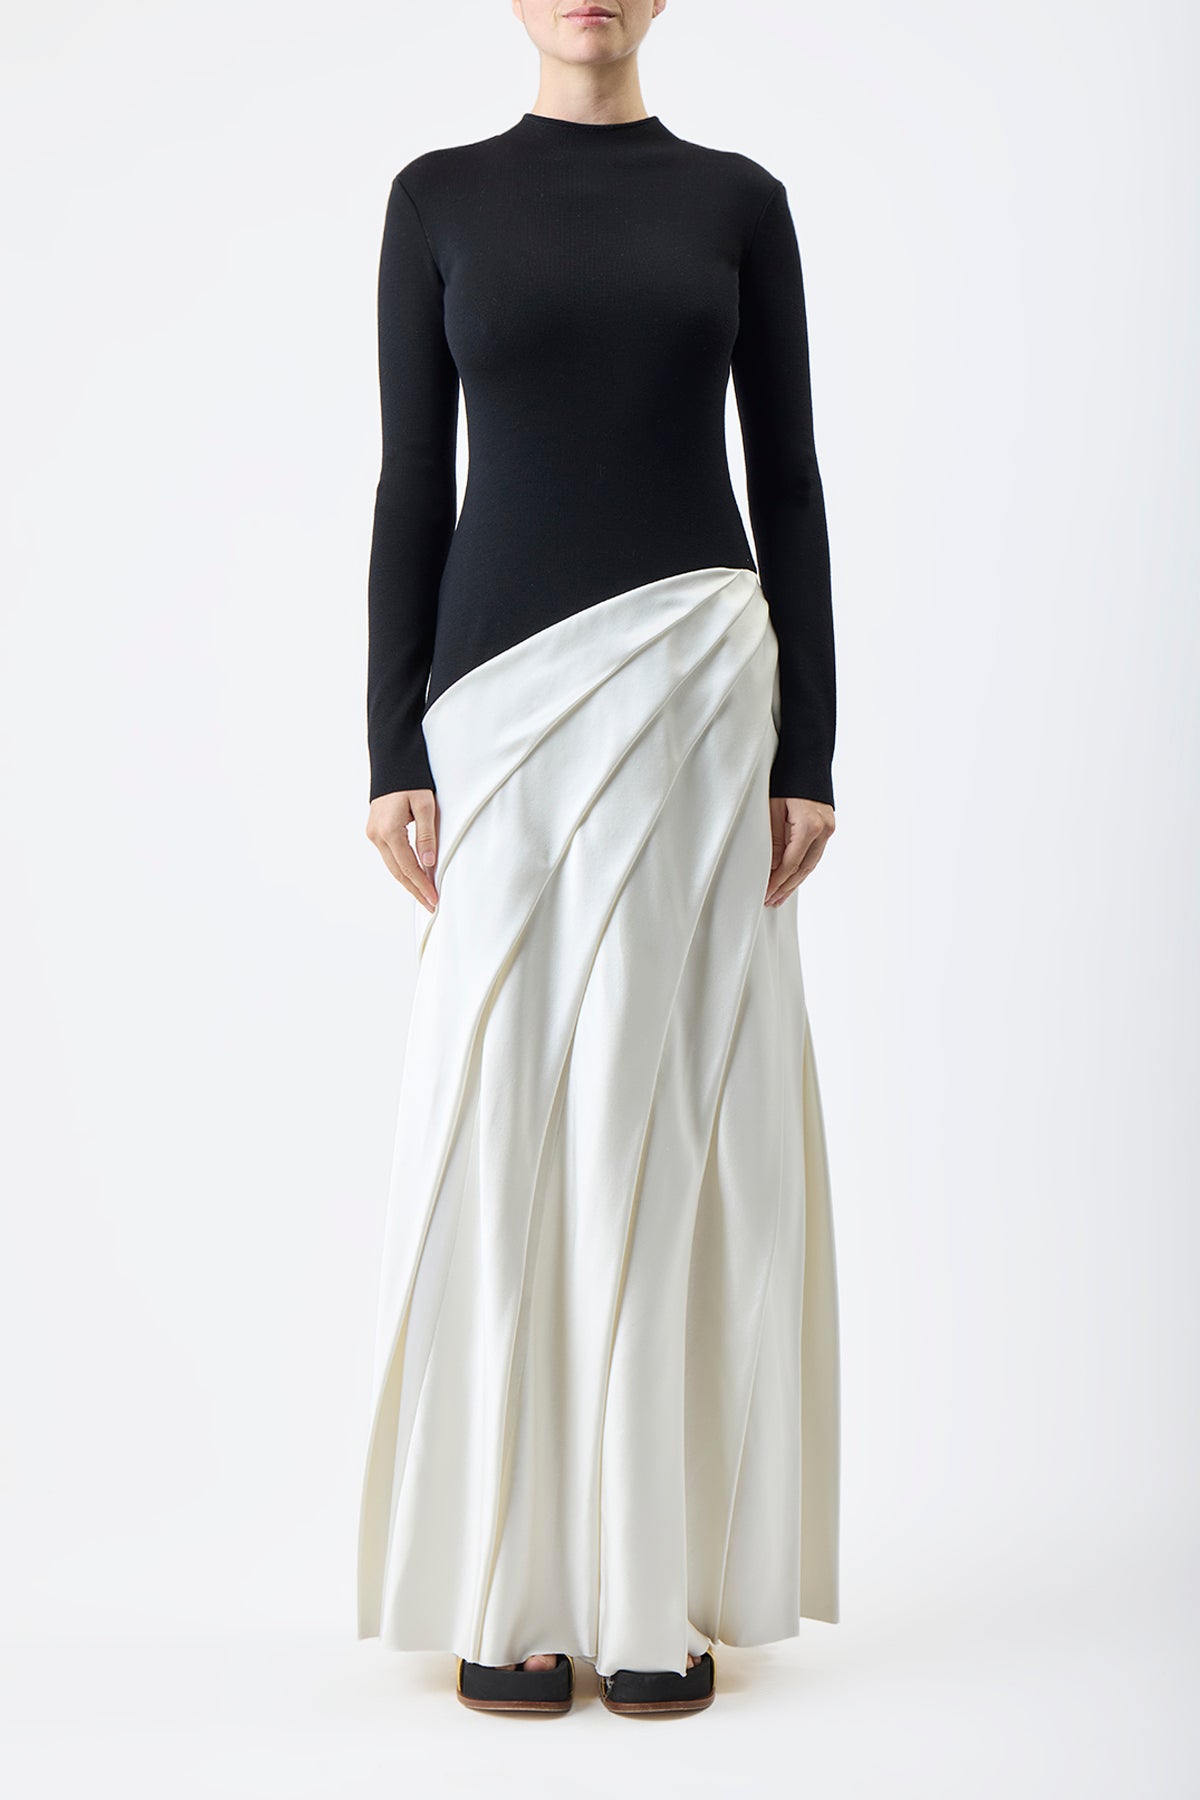 Ismay Pleated Dress in Black & Ivory Silk Satin